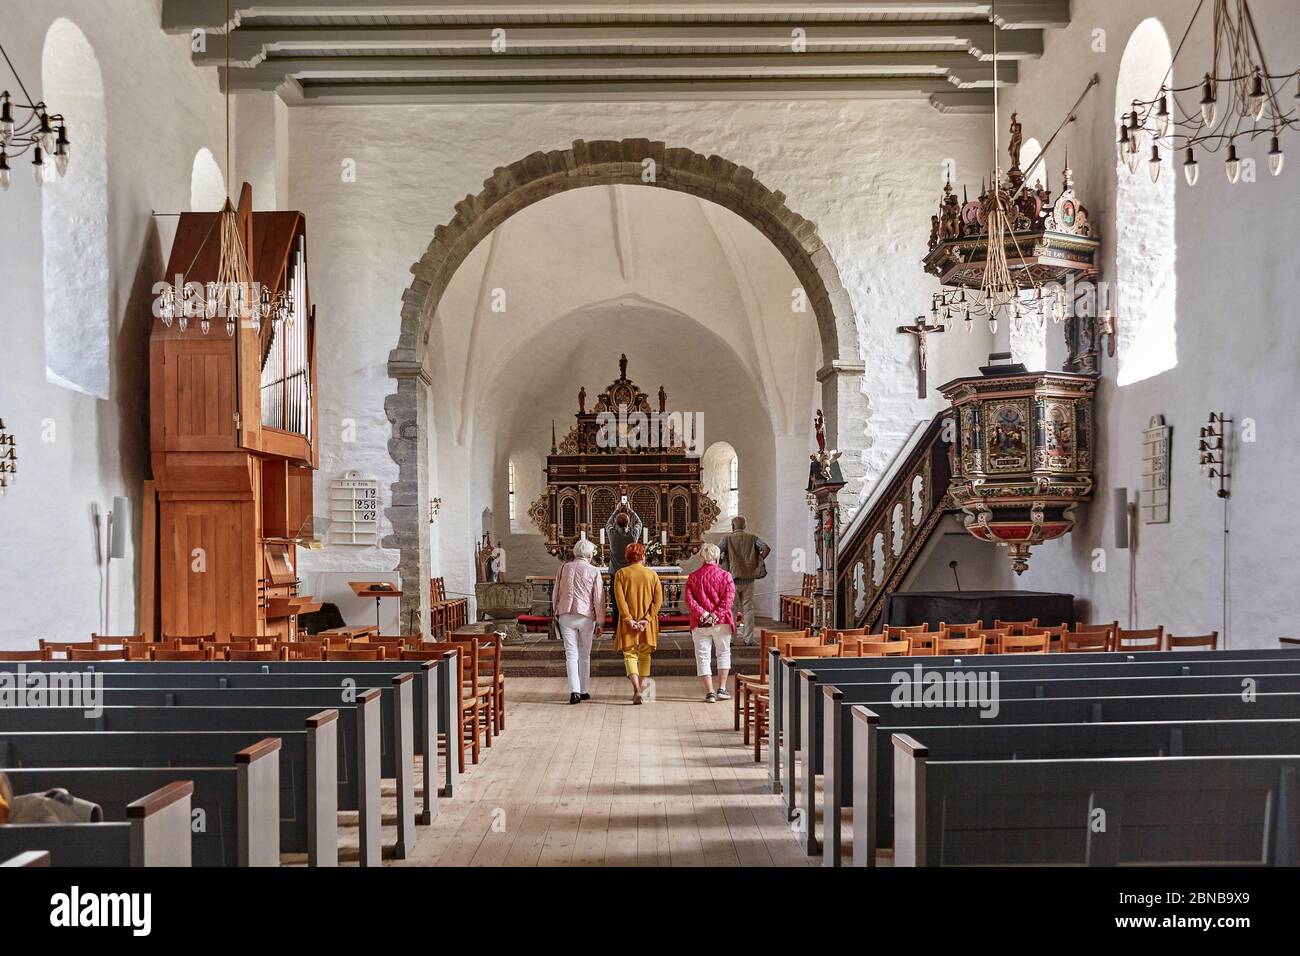 AAKIRKEBY, DENMARK - Jun 27, 2019: Aakirkeby, Bornholm island, Denmark - 27 June 2019. Tourists visiting Aa Church (Aa Kirke) - a Romanesque church da Stock Photo